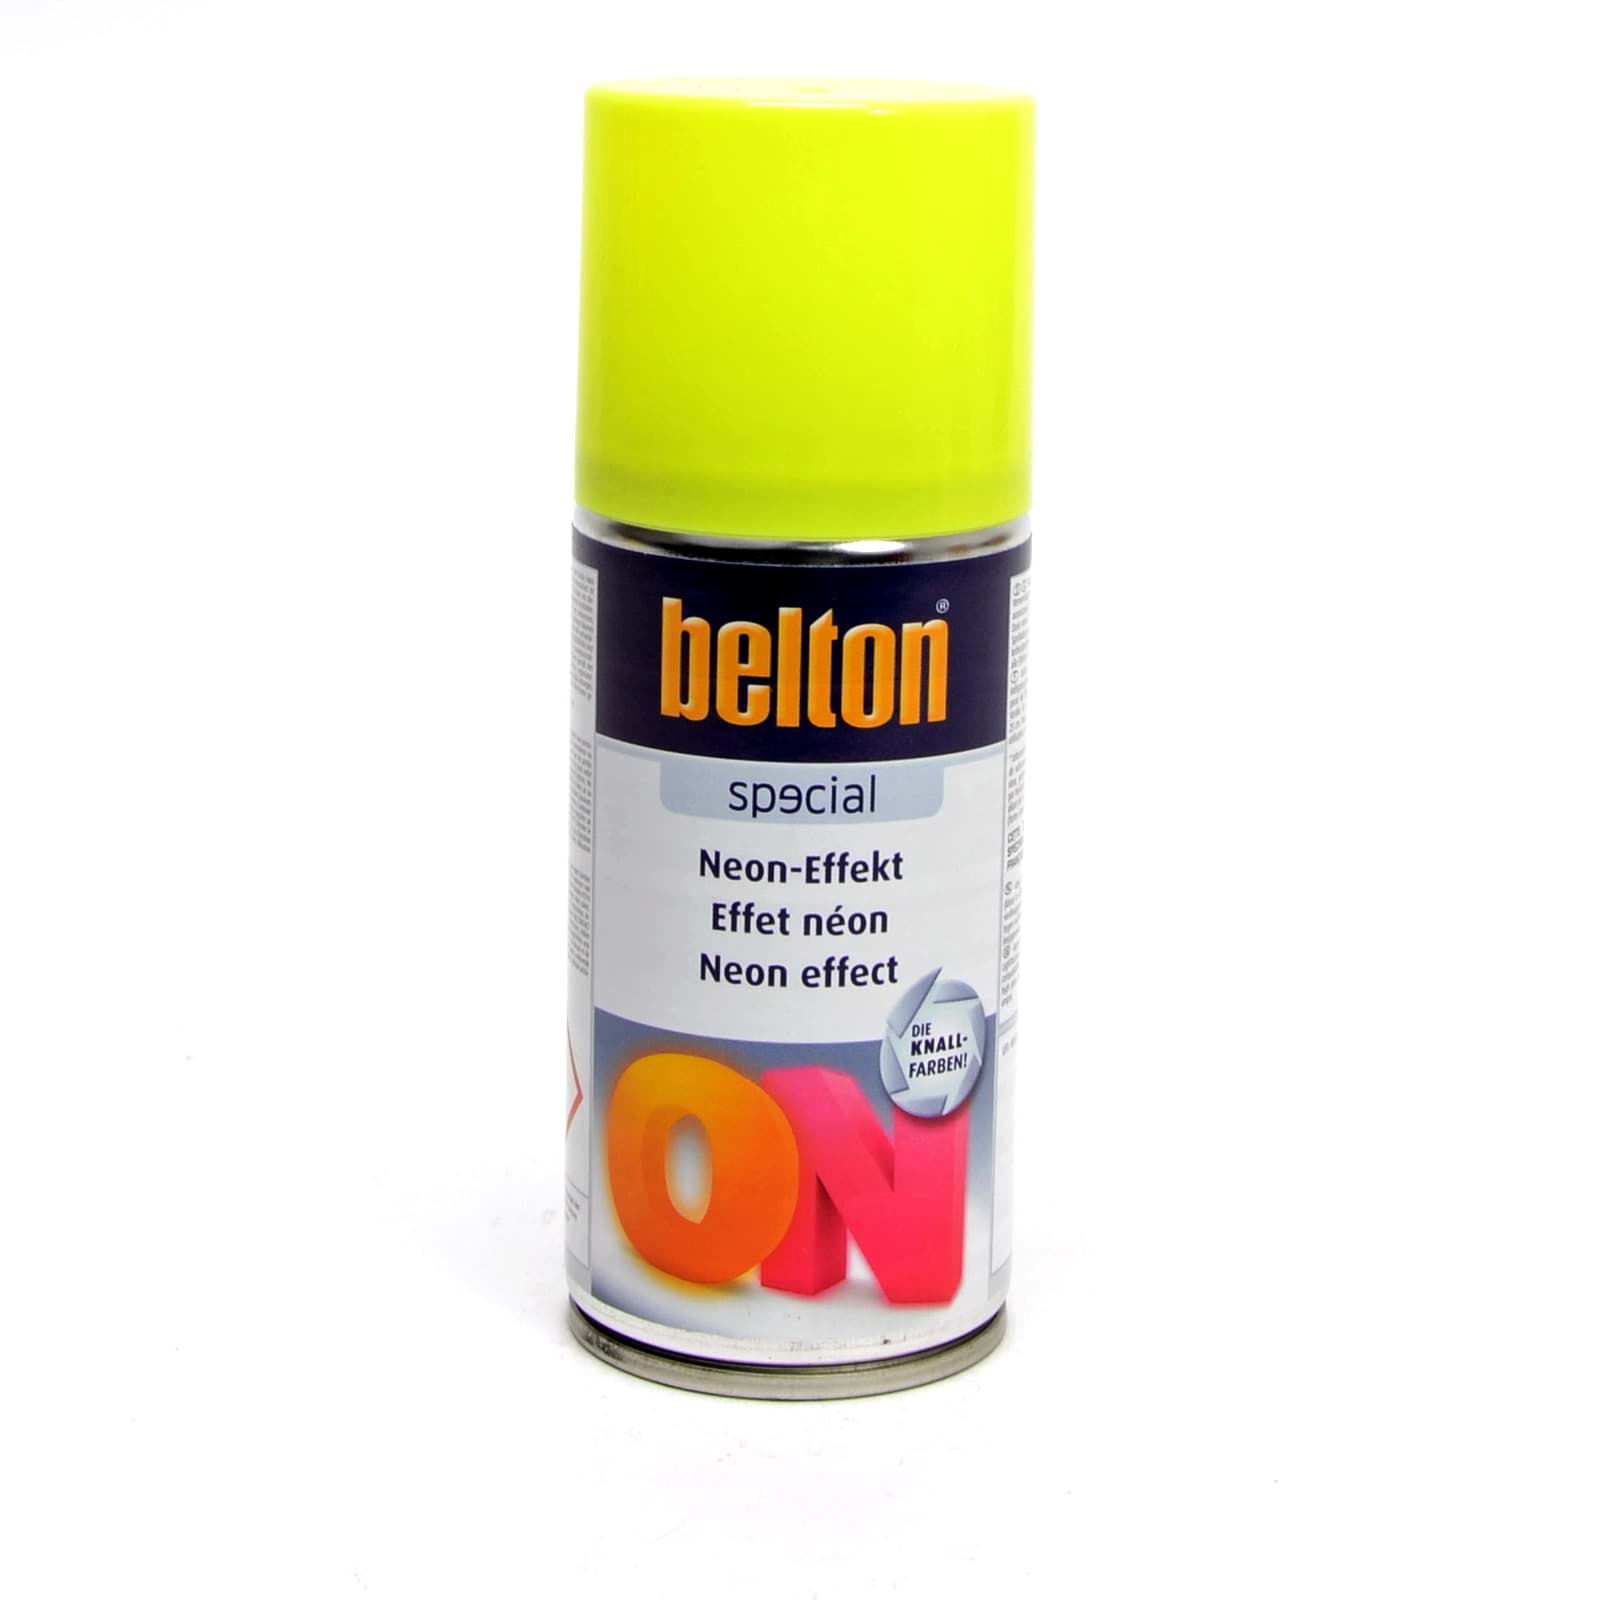 Picture of Belton SPECIAL NEON-EFFEKT Gelb 150ml